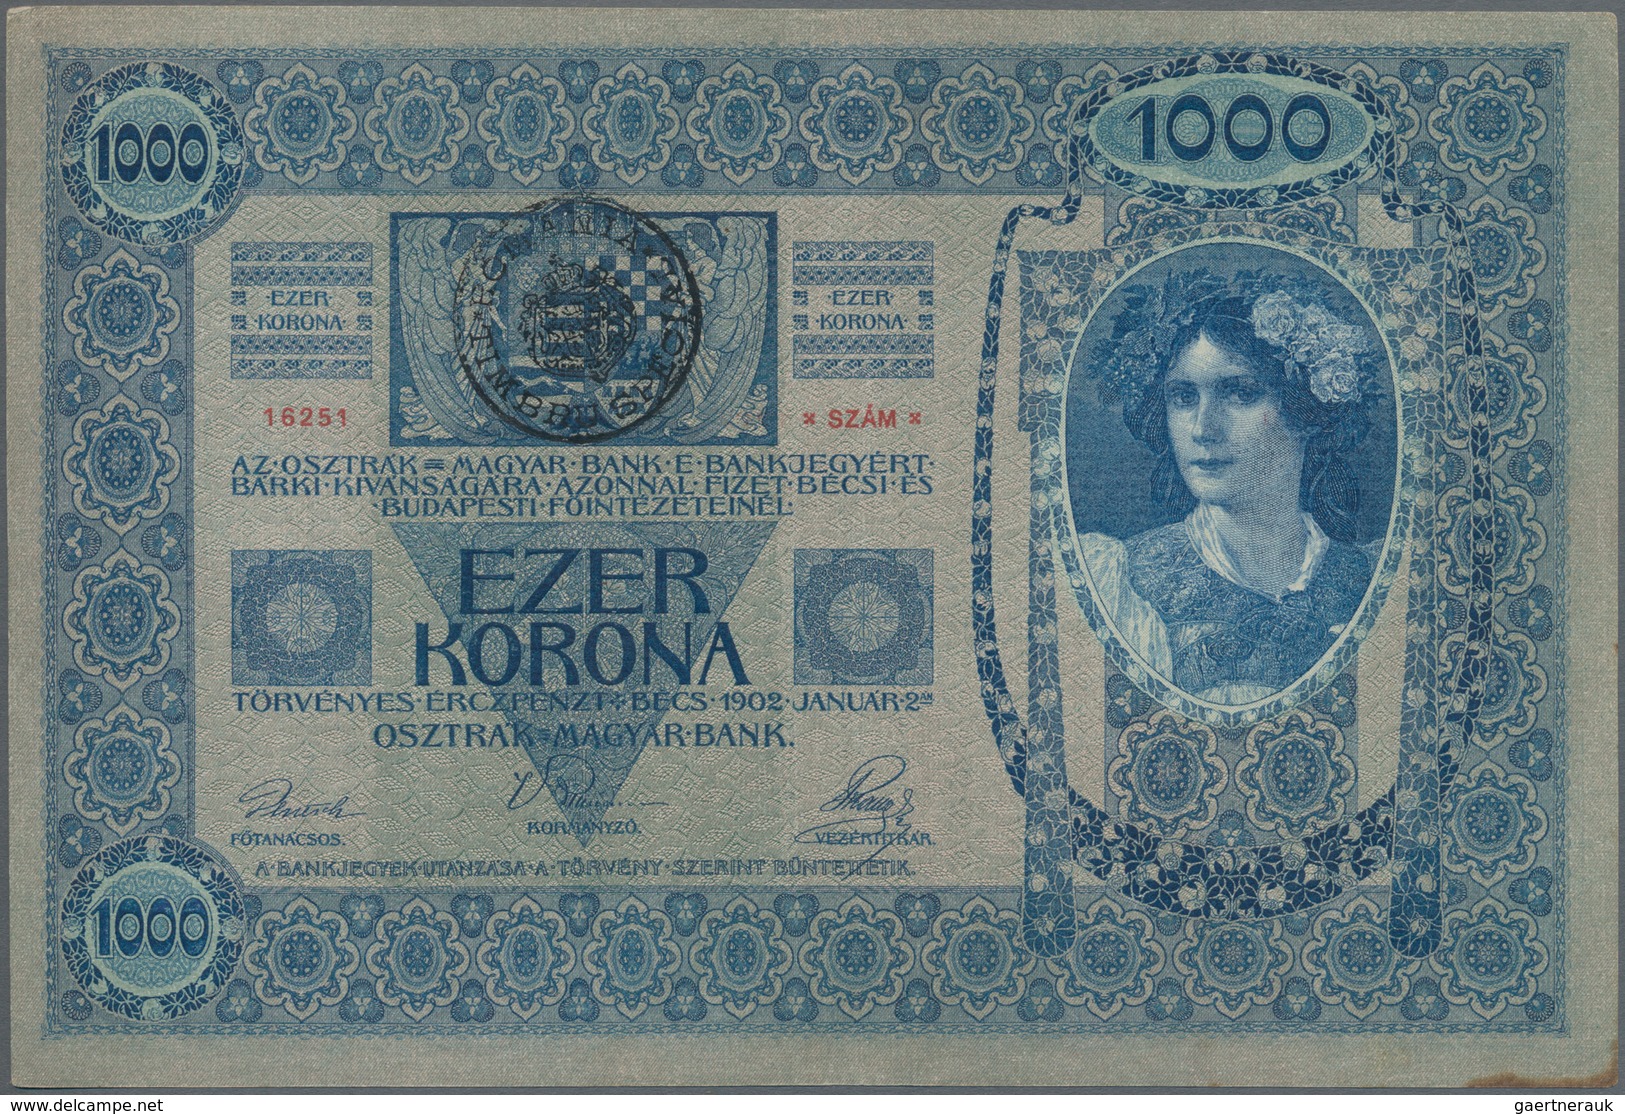 Romania / Rumänien: Transilvania (Siebenbürgen) & Banat 1000 Kronen 1902 (1919) Handstamp On The Hun - Romania